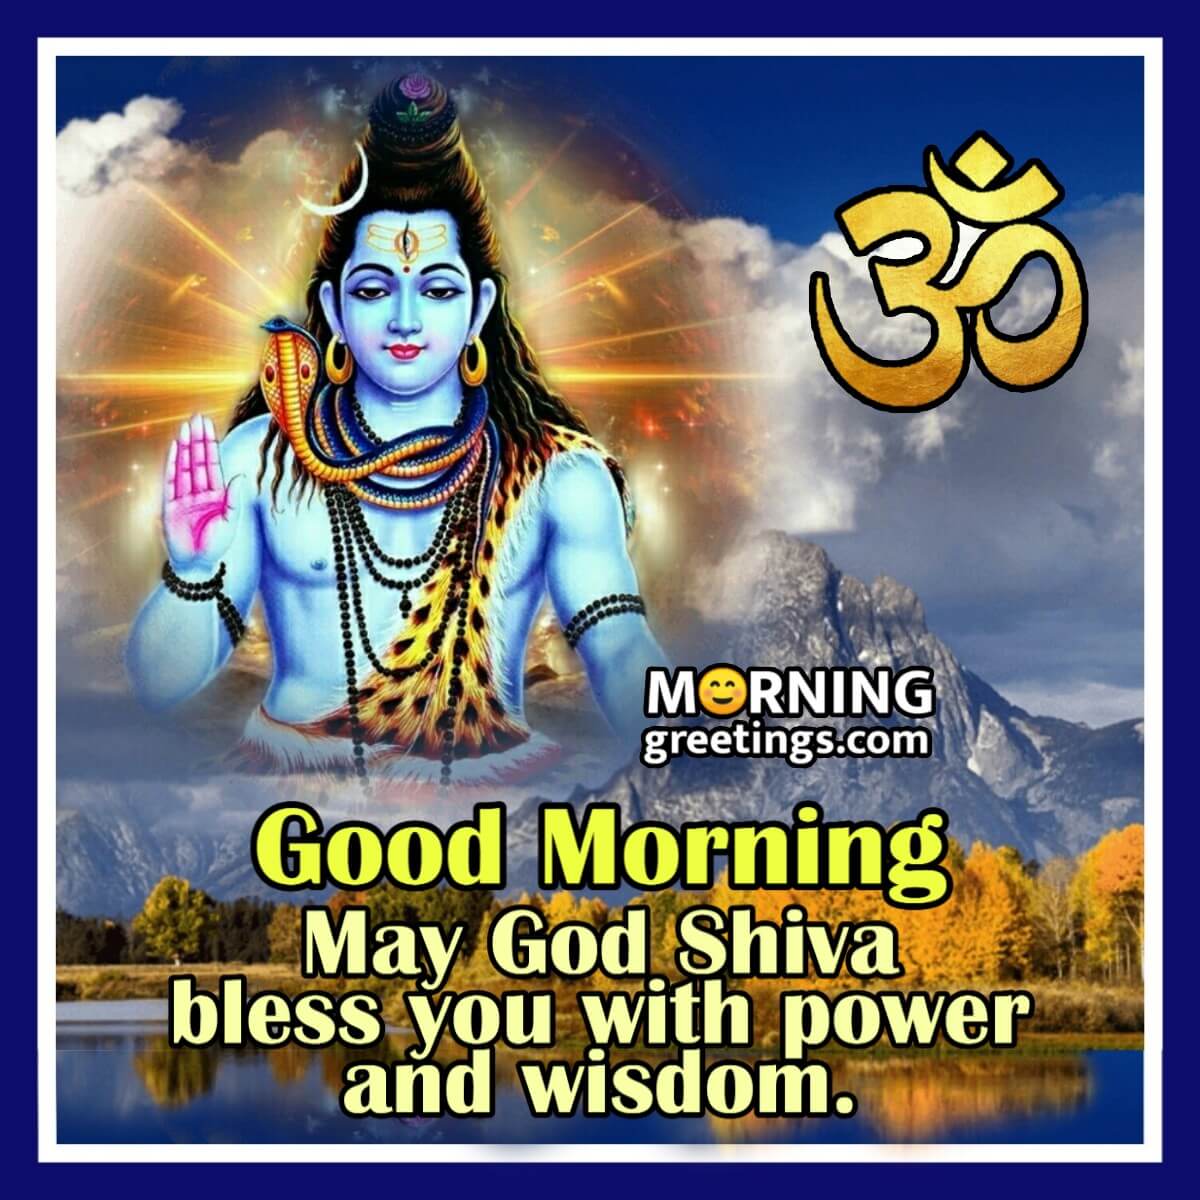 Good Morning May God Shiva Bless You